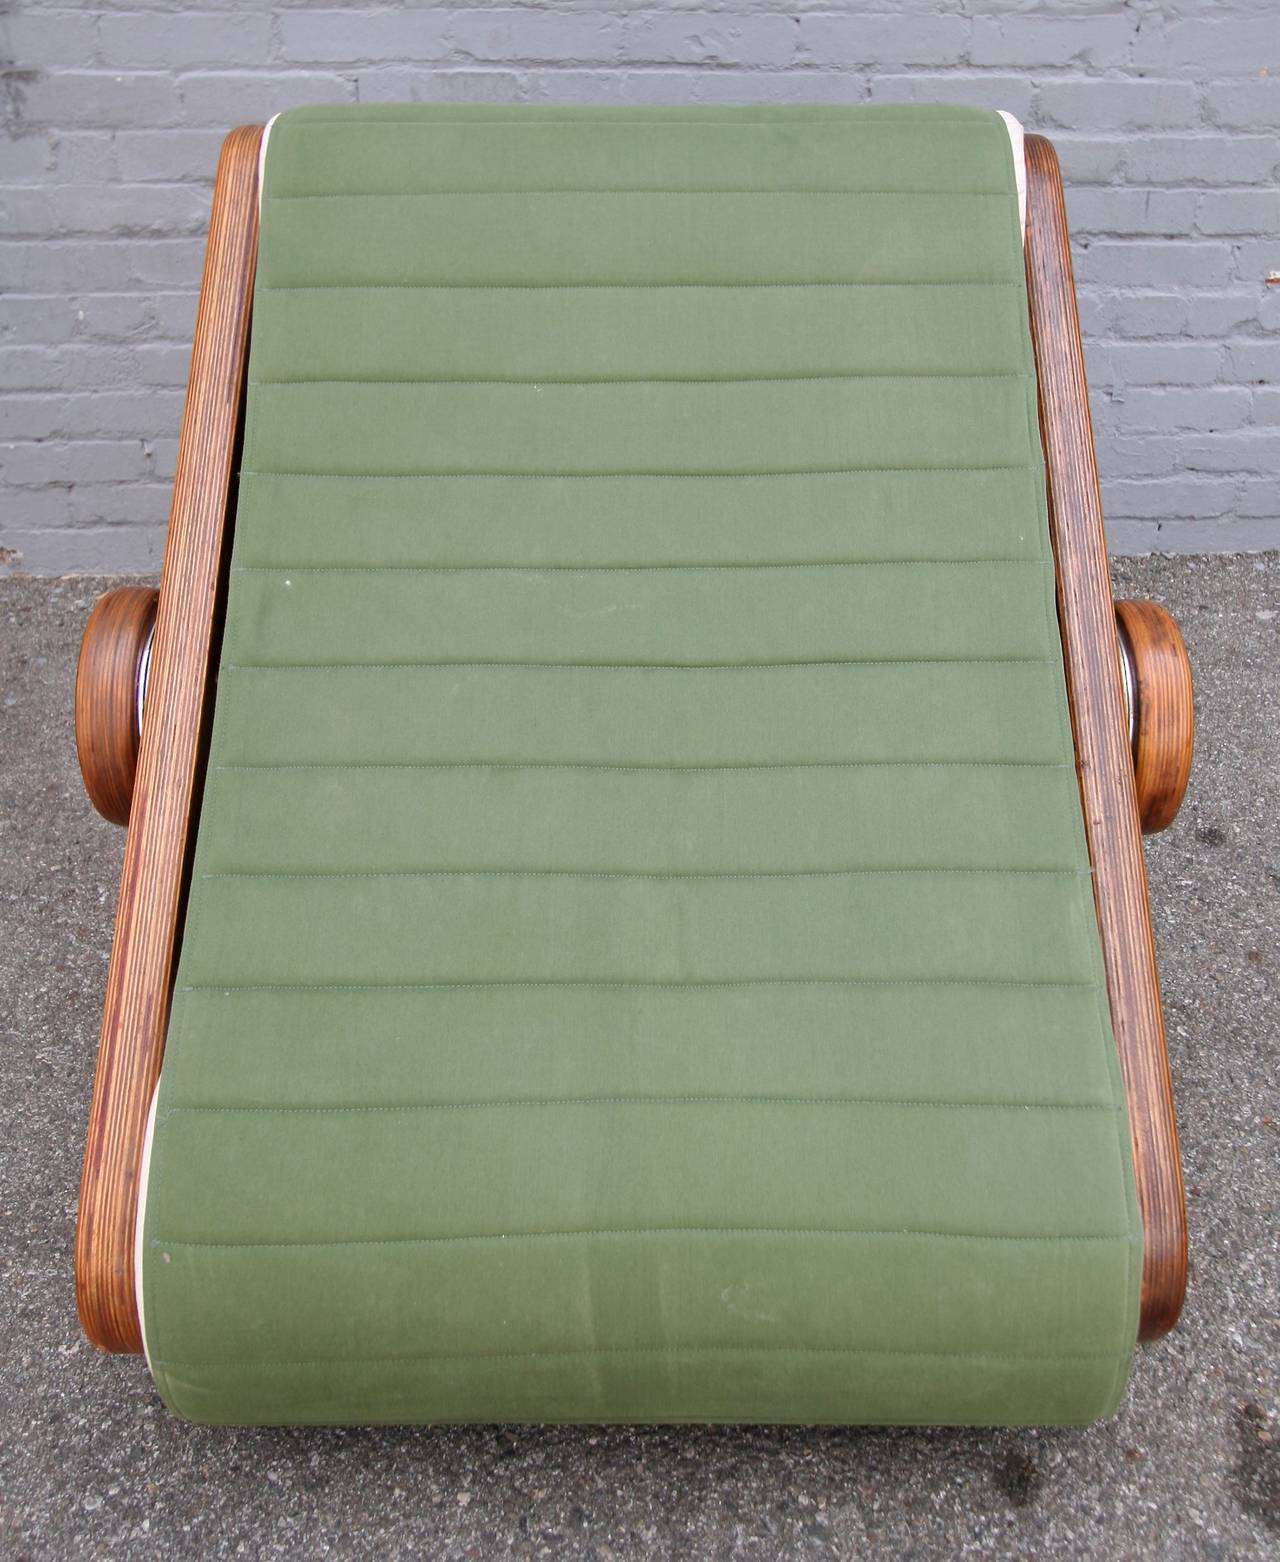 Rampa chair by Sergio Bernardes from the 1970s in Brazilian jacaranda.